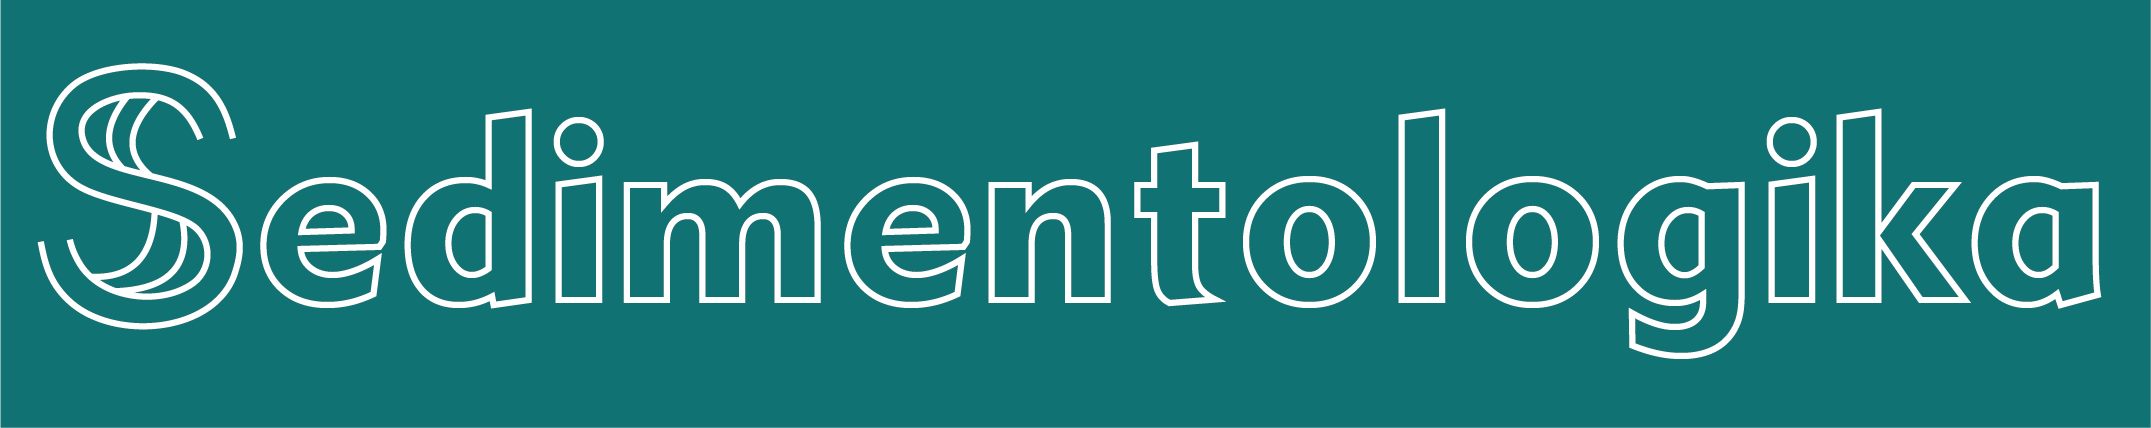 Sedimentologika Logo